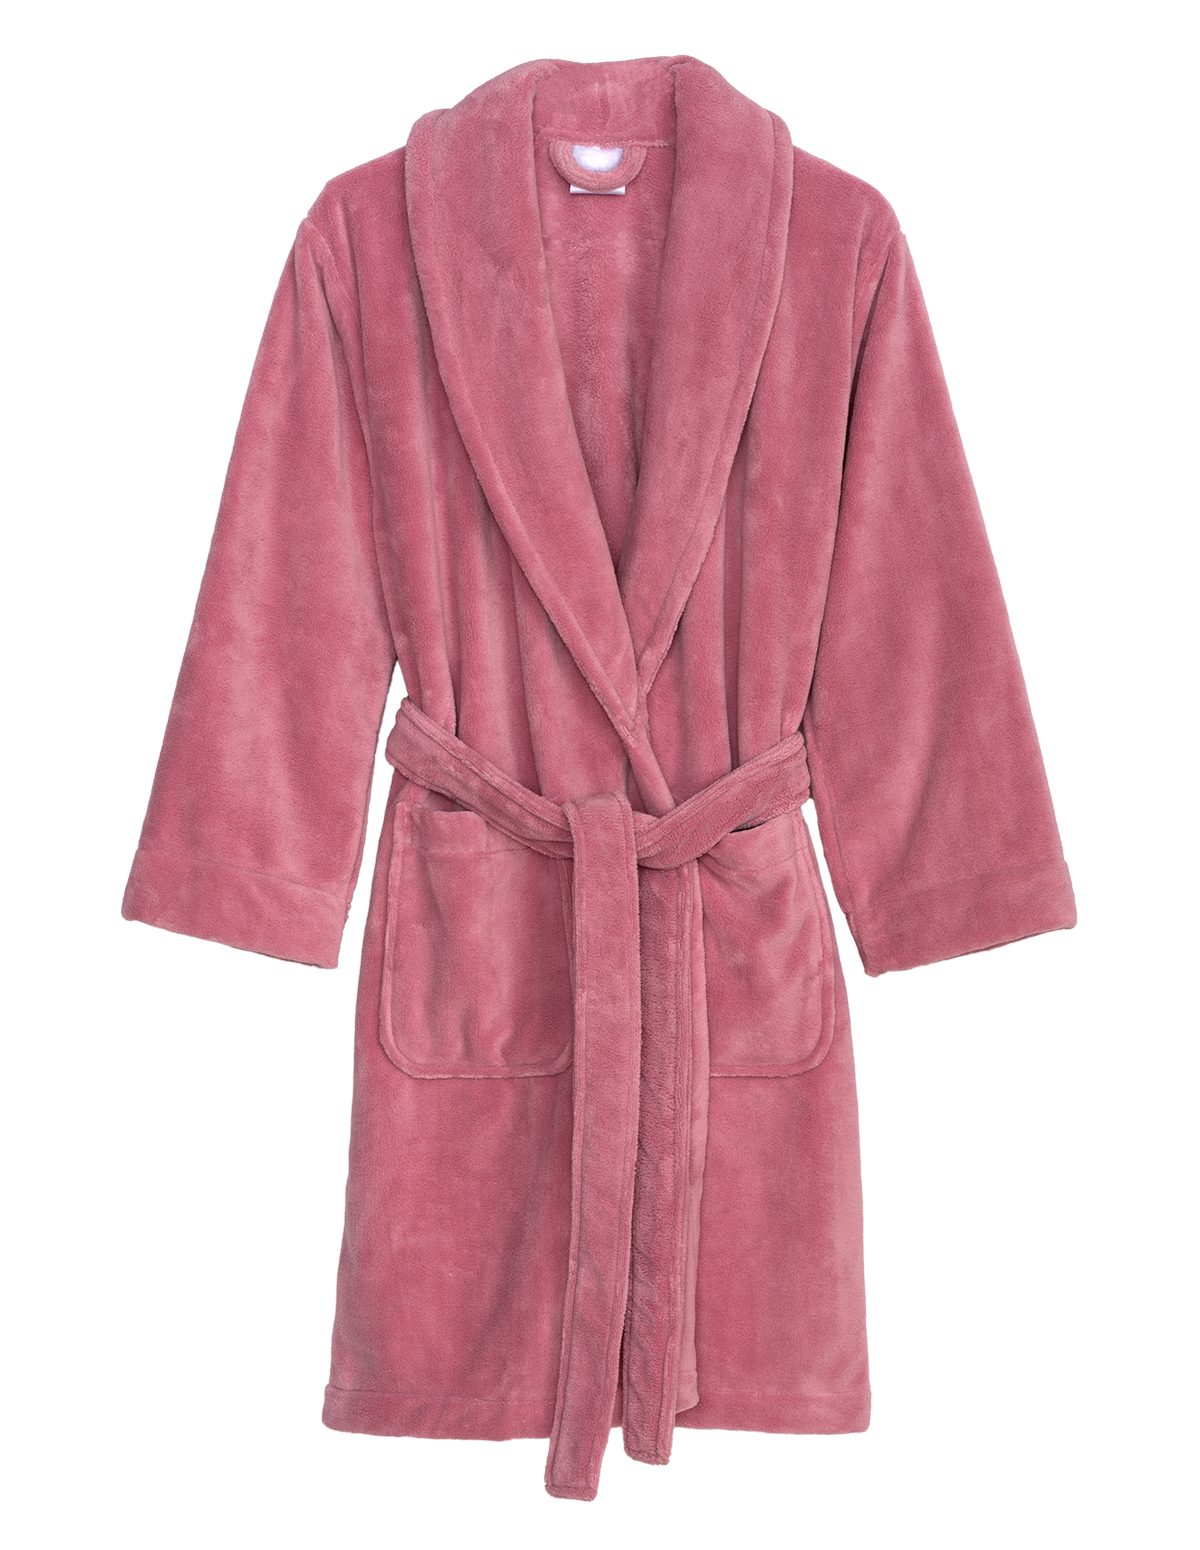 TowelSelections - TowelSelections Women's Robe, Plush Fleece Short Spa ...